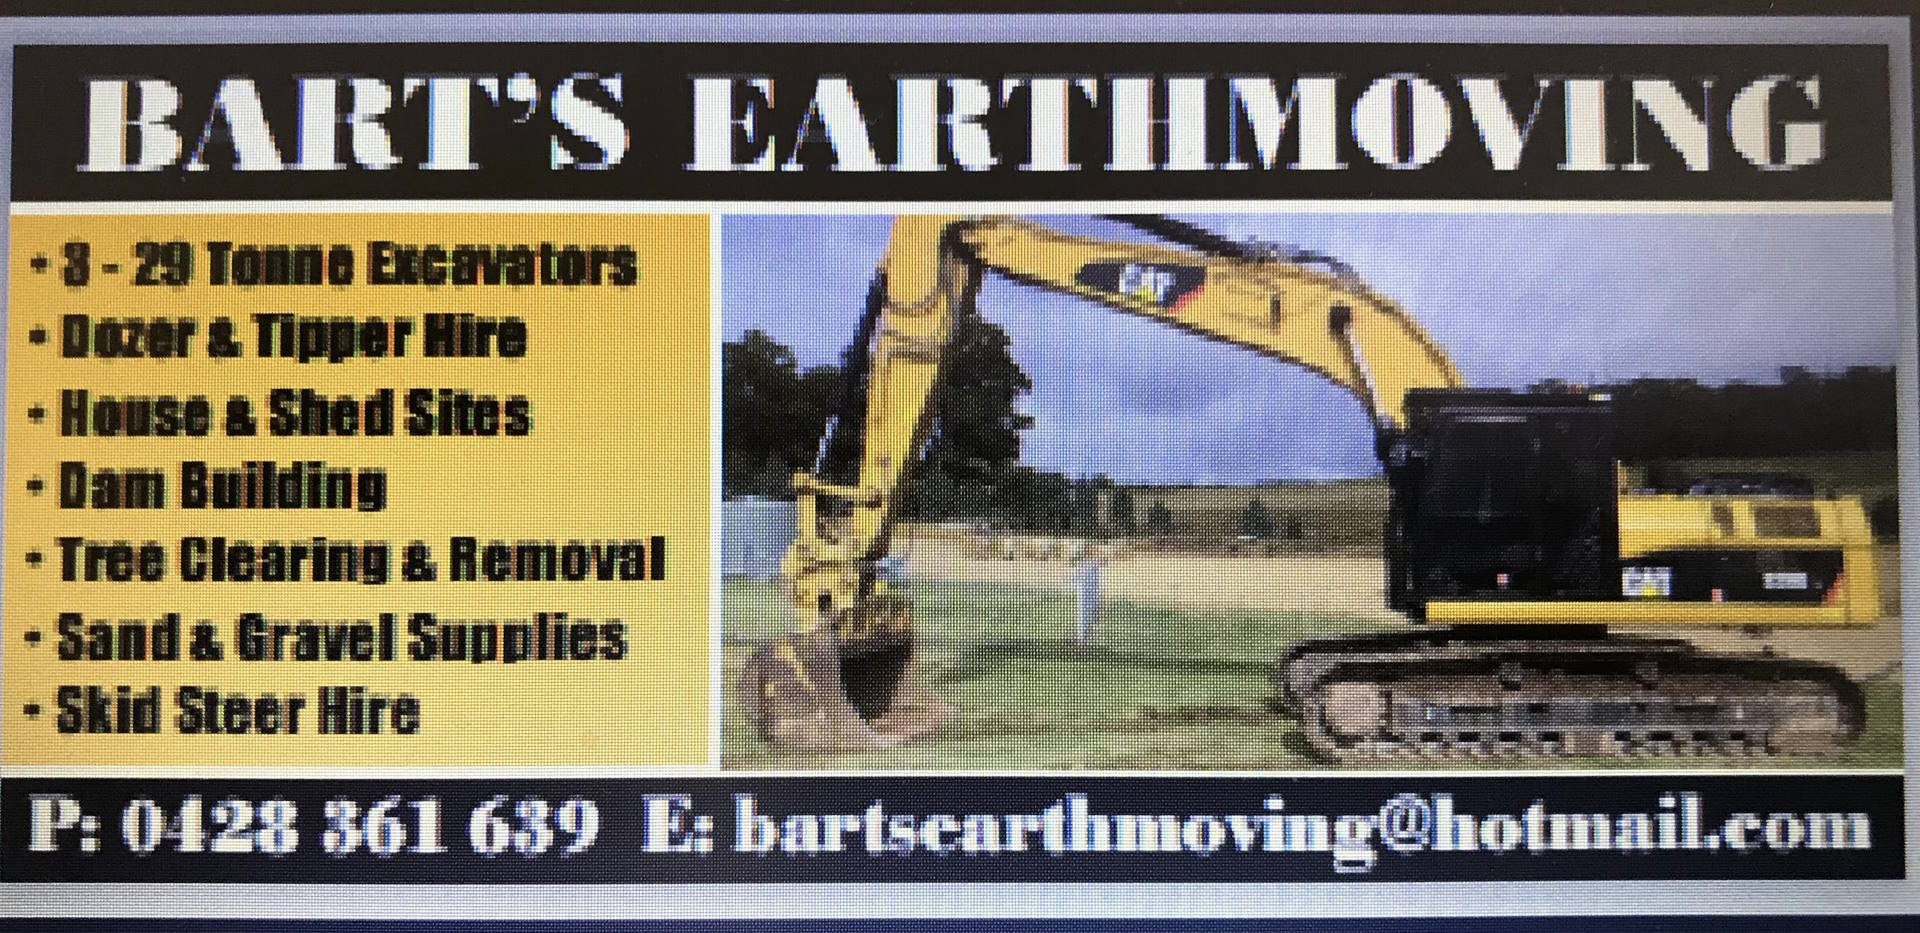 Bart's Earthmoving Pty Ltd